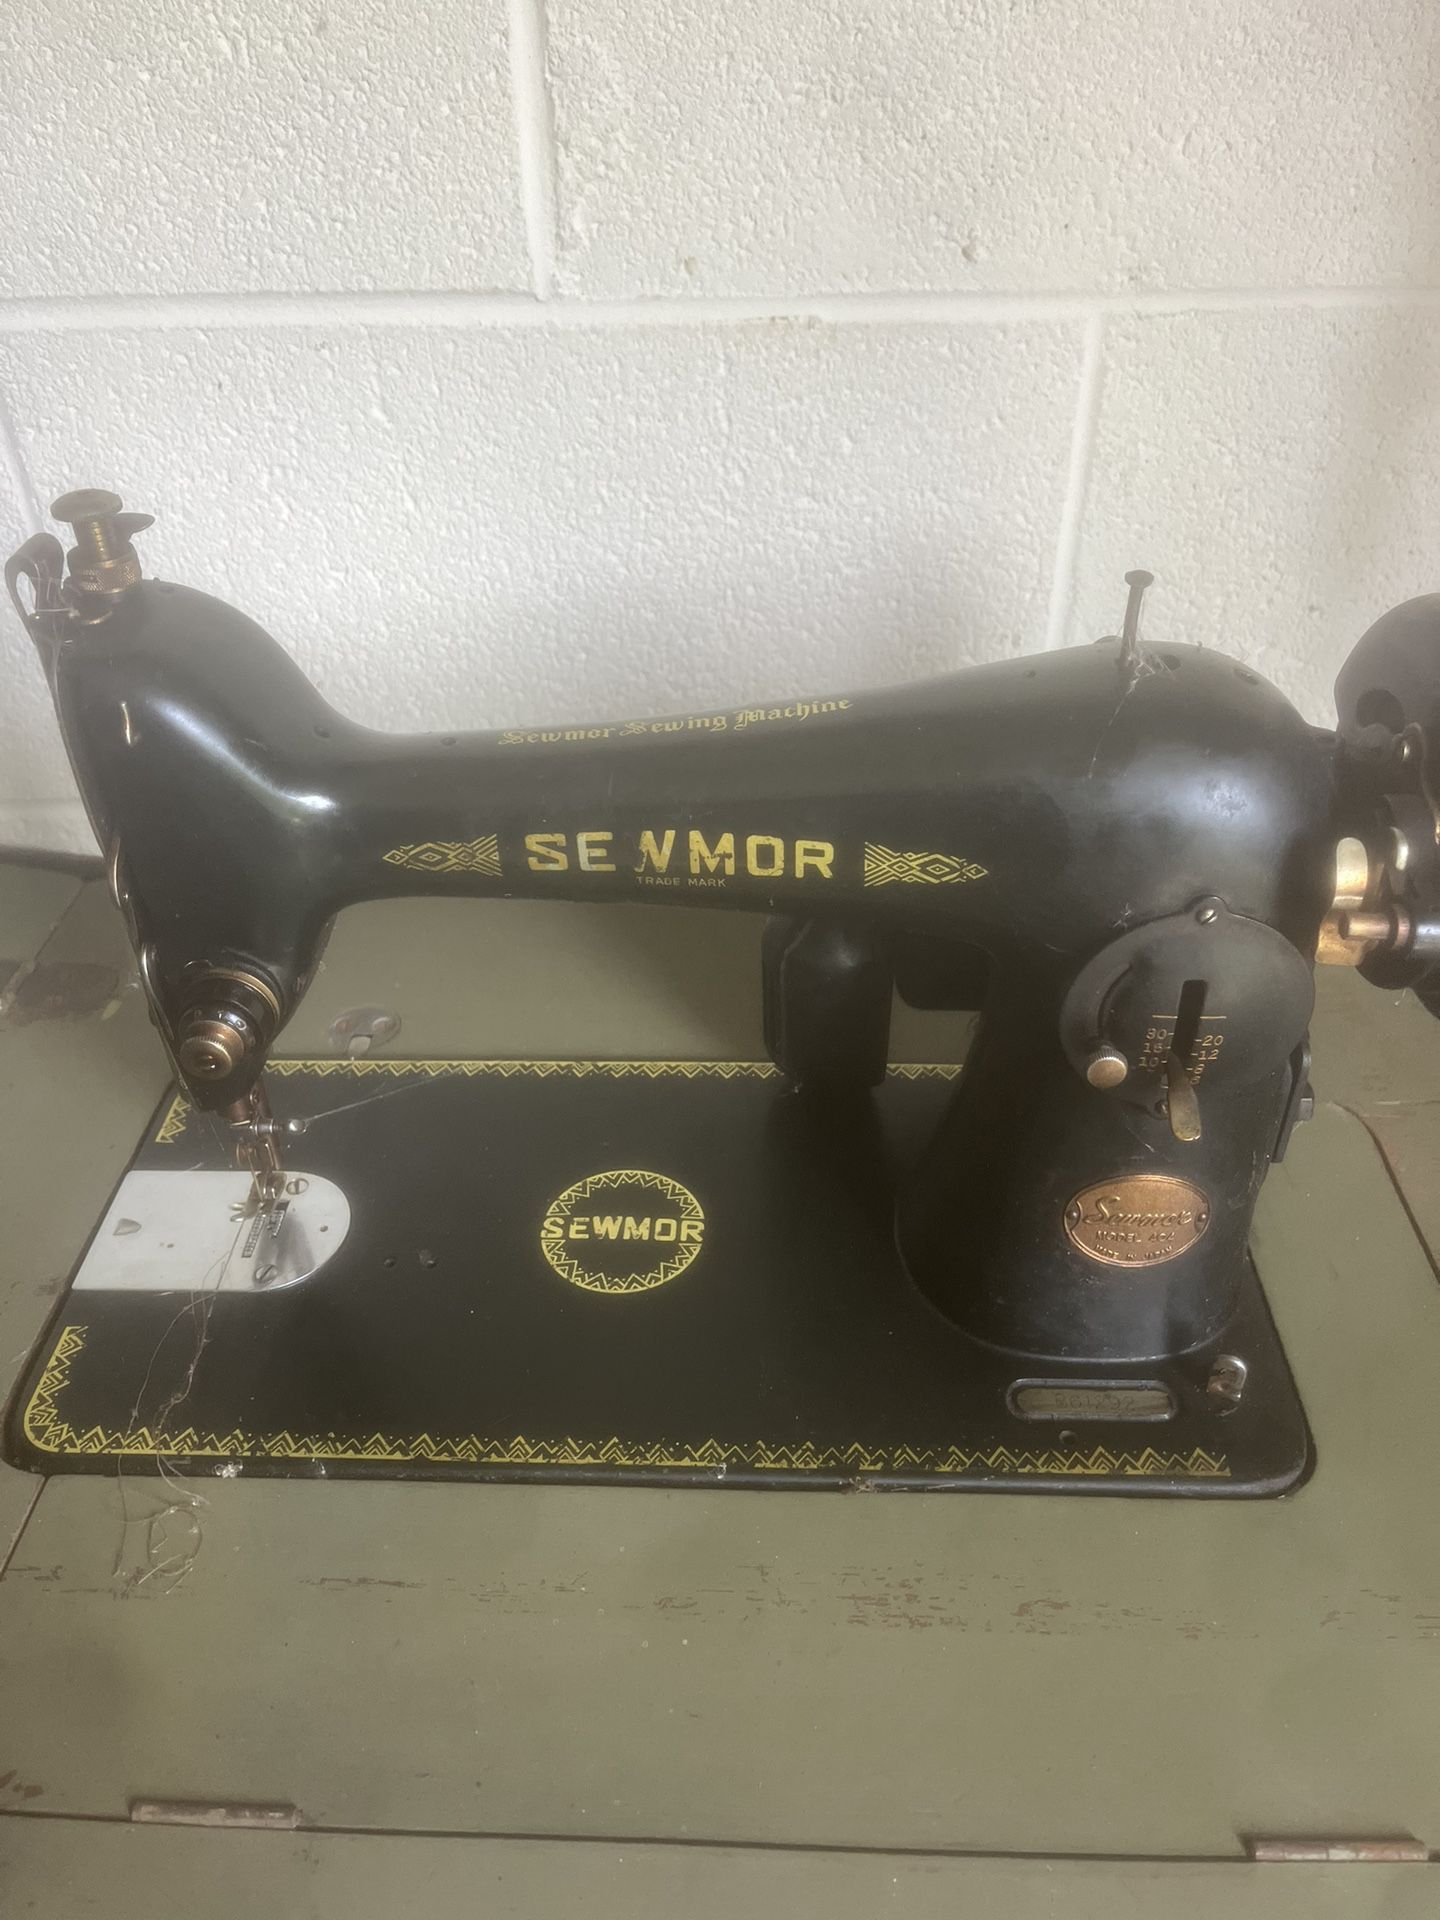 Seymor Sewing Machine